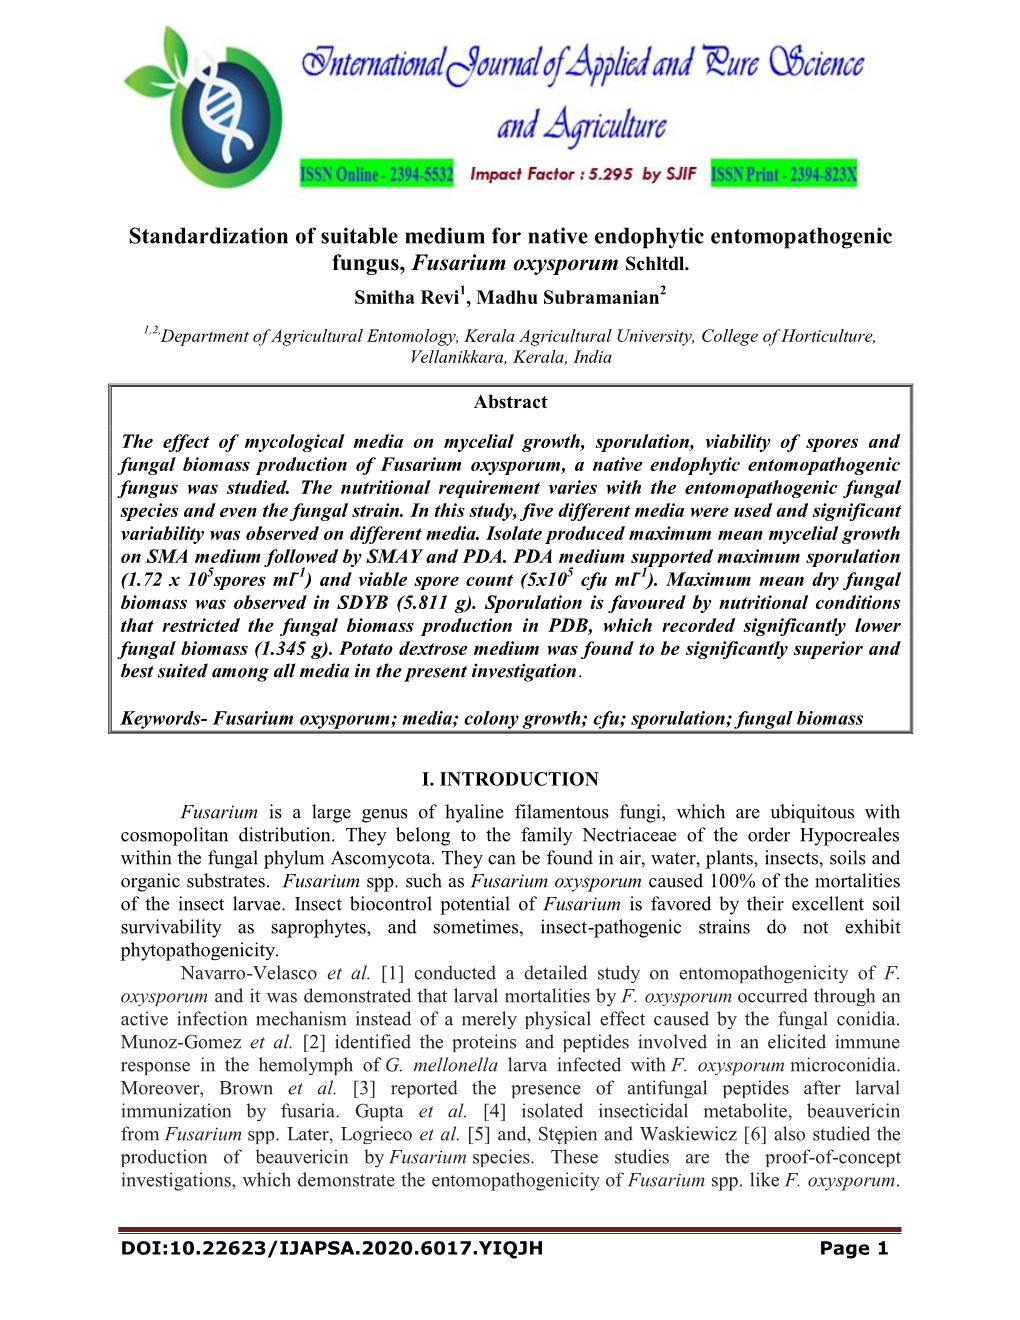 Standardization of Suitable Medium for Native Endophytic Entomopathogenic Fungus, Fusarium Oxysporum Schltdl